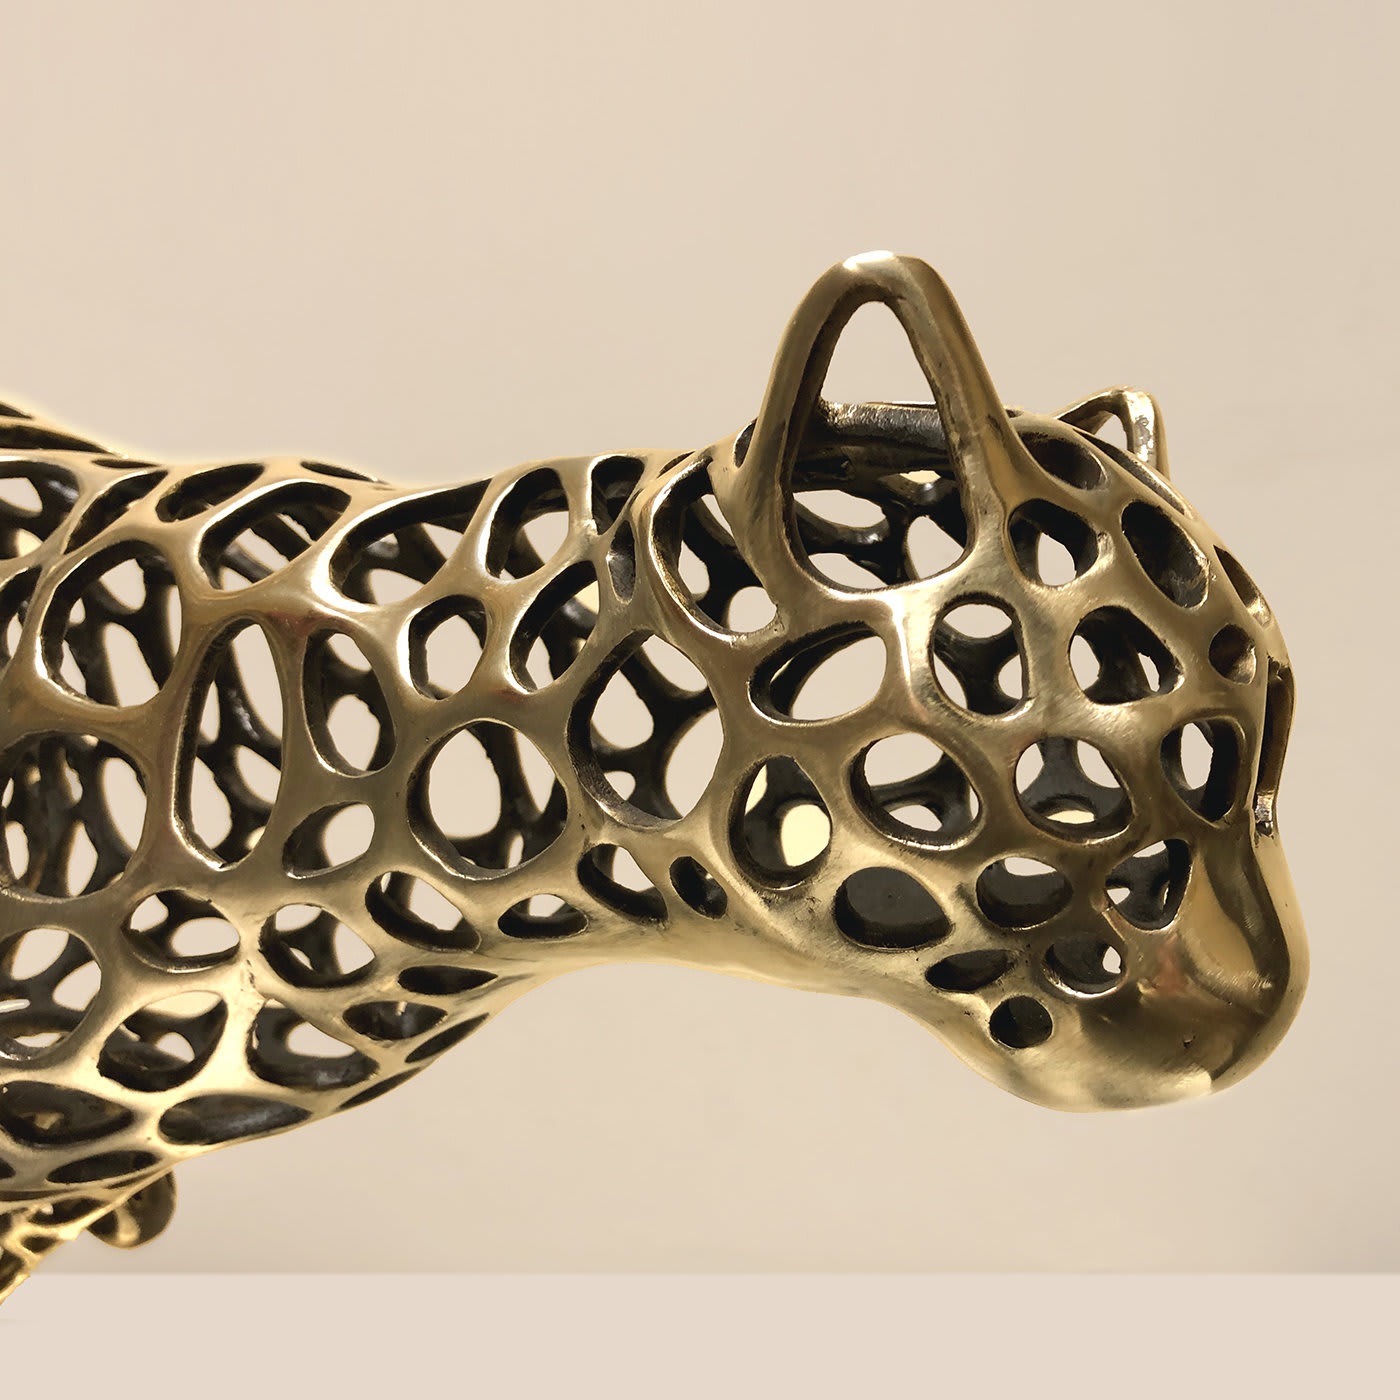 Running Cheetah Sculpture - Fonderia Artistica Ruocco